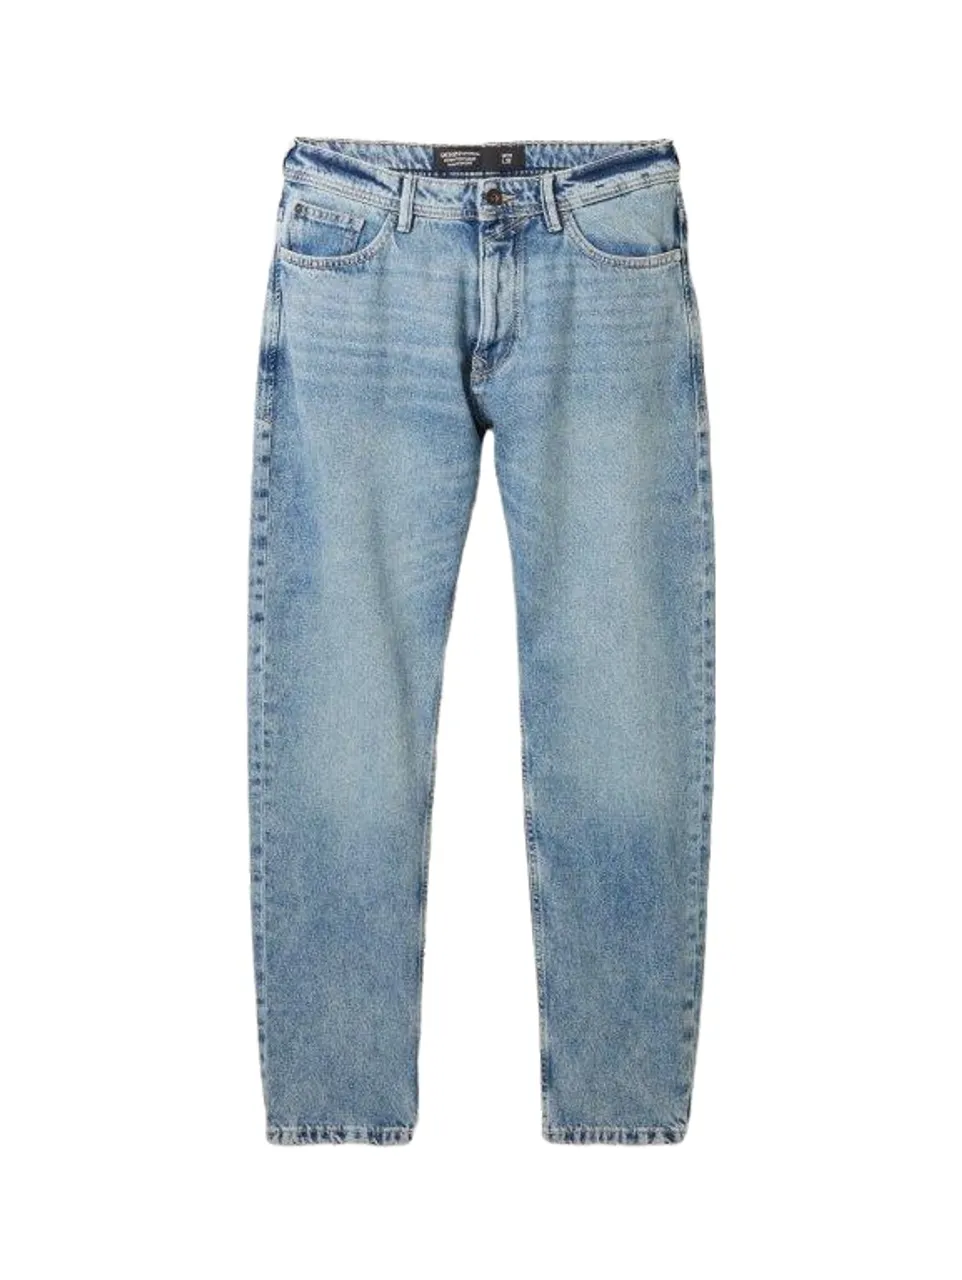 Tom Tailor Denim Herren Jeans LOOSE STRAIGHT - Relaxed Fit - Blau - Super Stone Blue Denim Tint